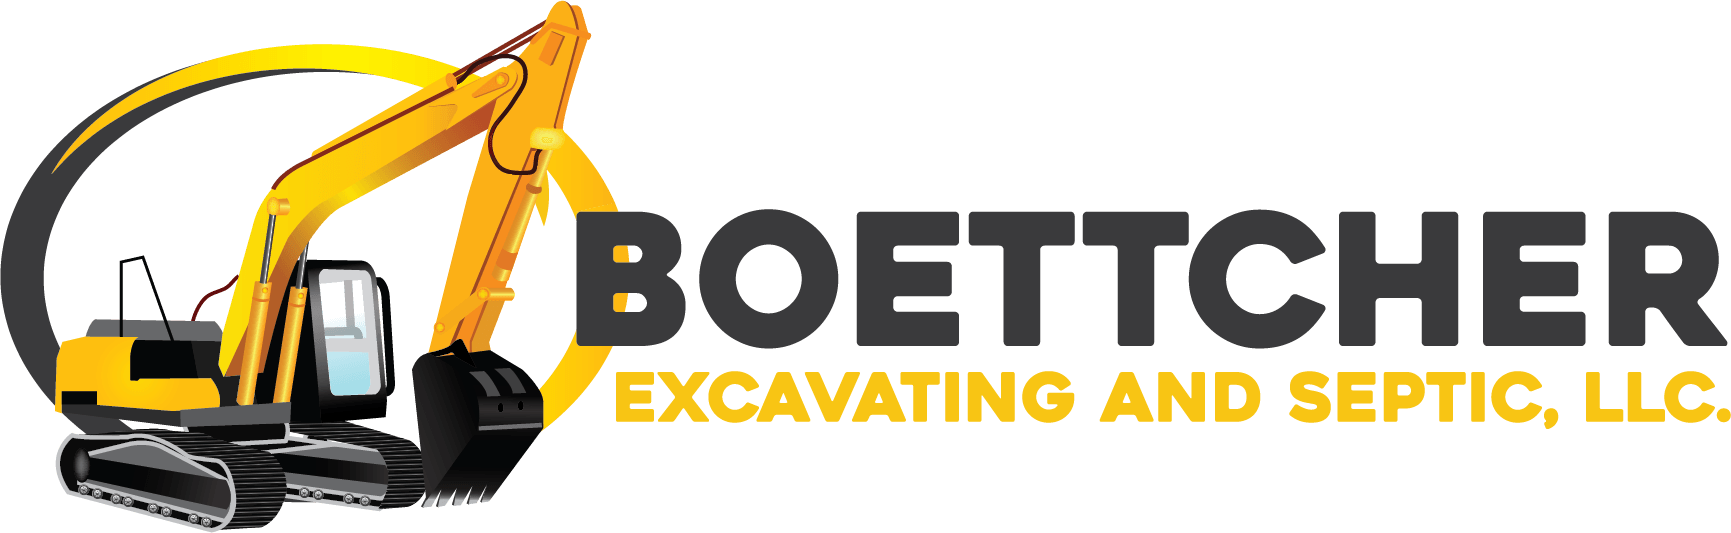 Boettcher Excavating & Septic LLC logo